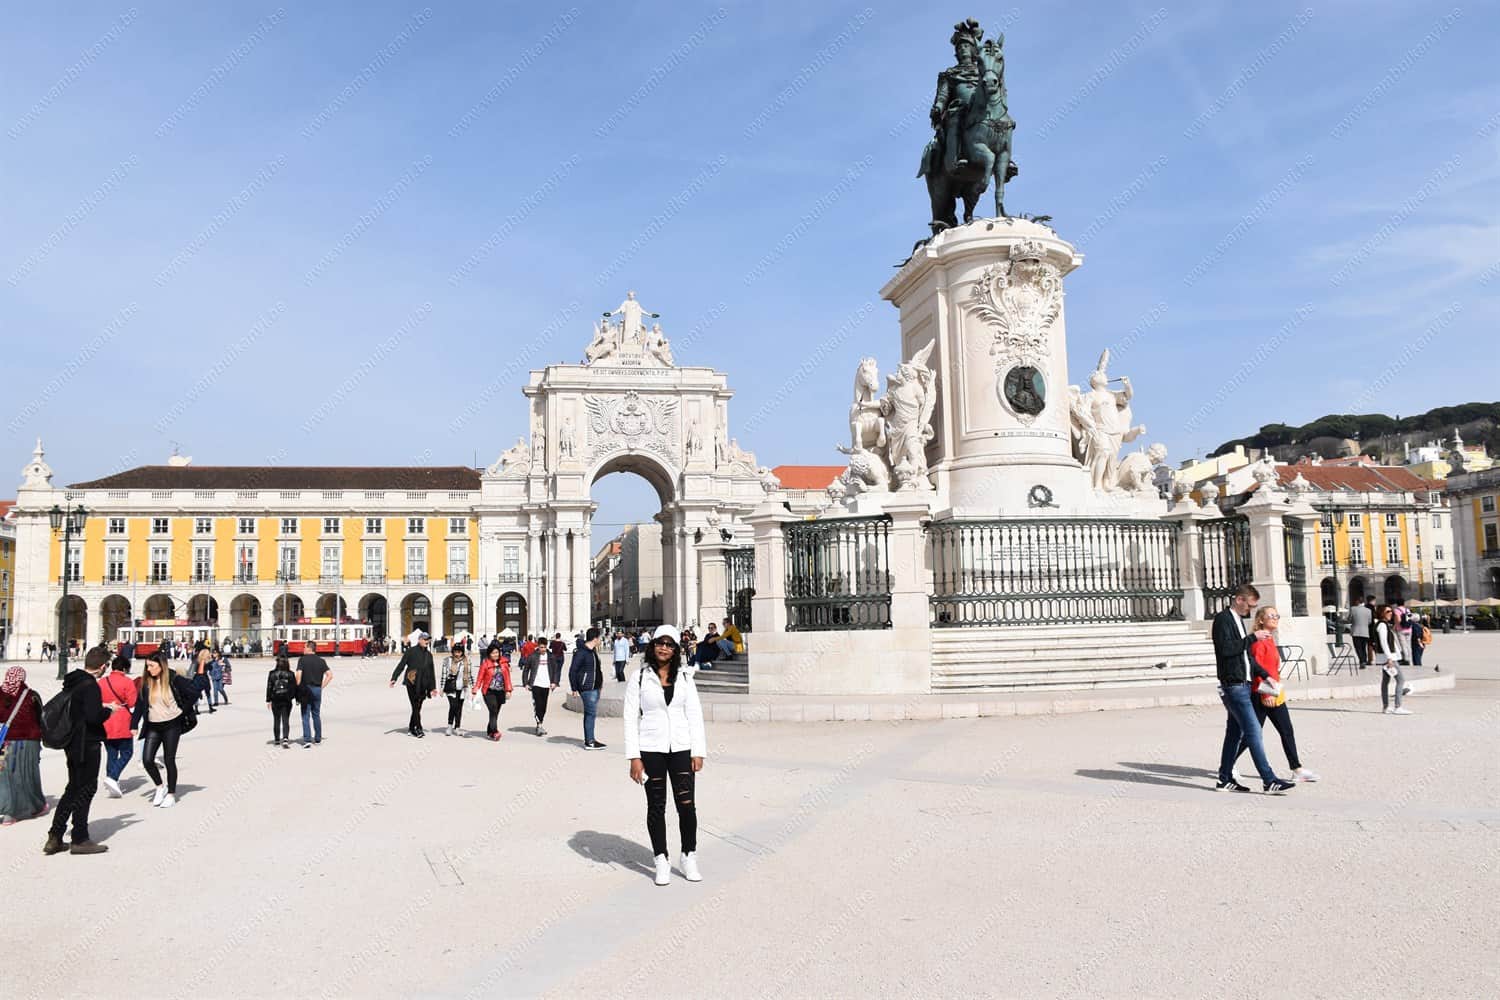 Praça do Comércio Public square In Lisbon